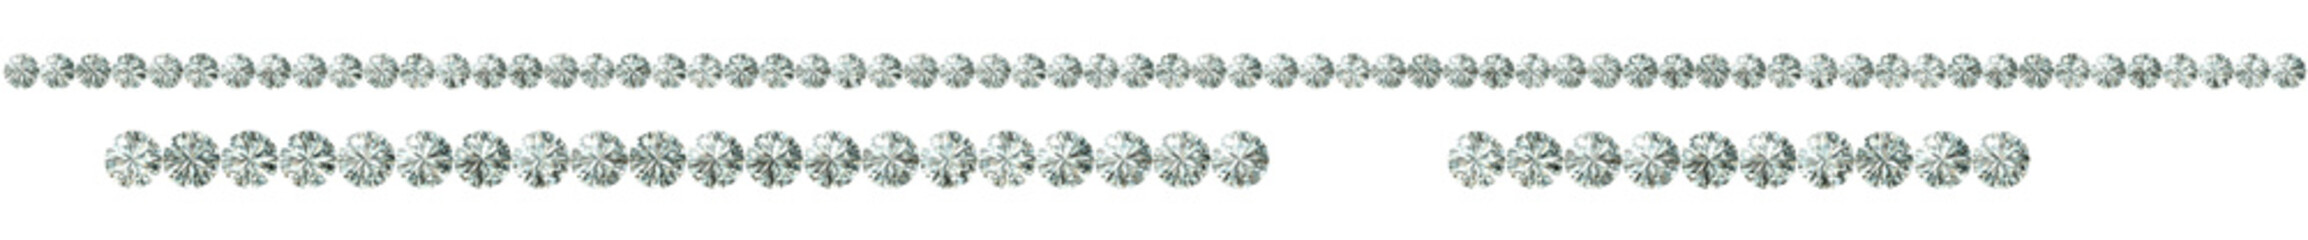 line of diamonds on transparent background  - 543682725